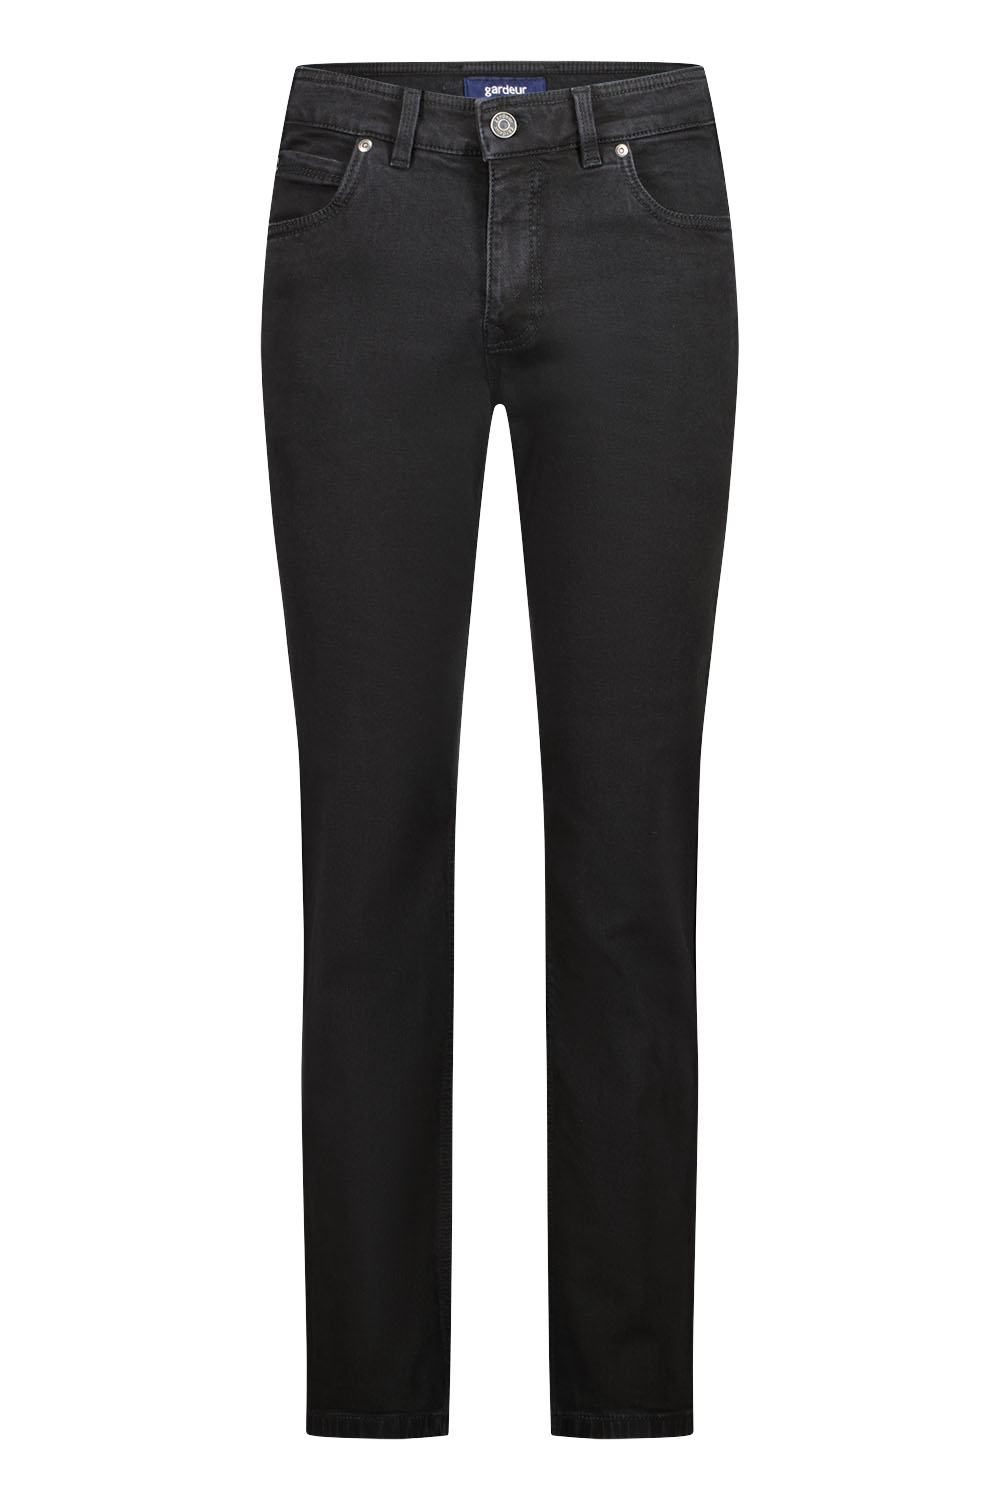 Gardeur - Batu-2 Modern Fit 5-Pocket Jeans Zwart - 34/30 - Heren